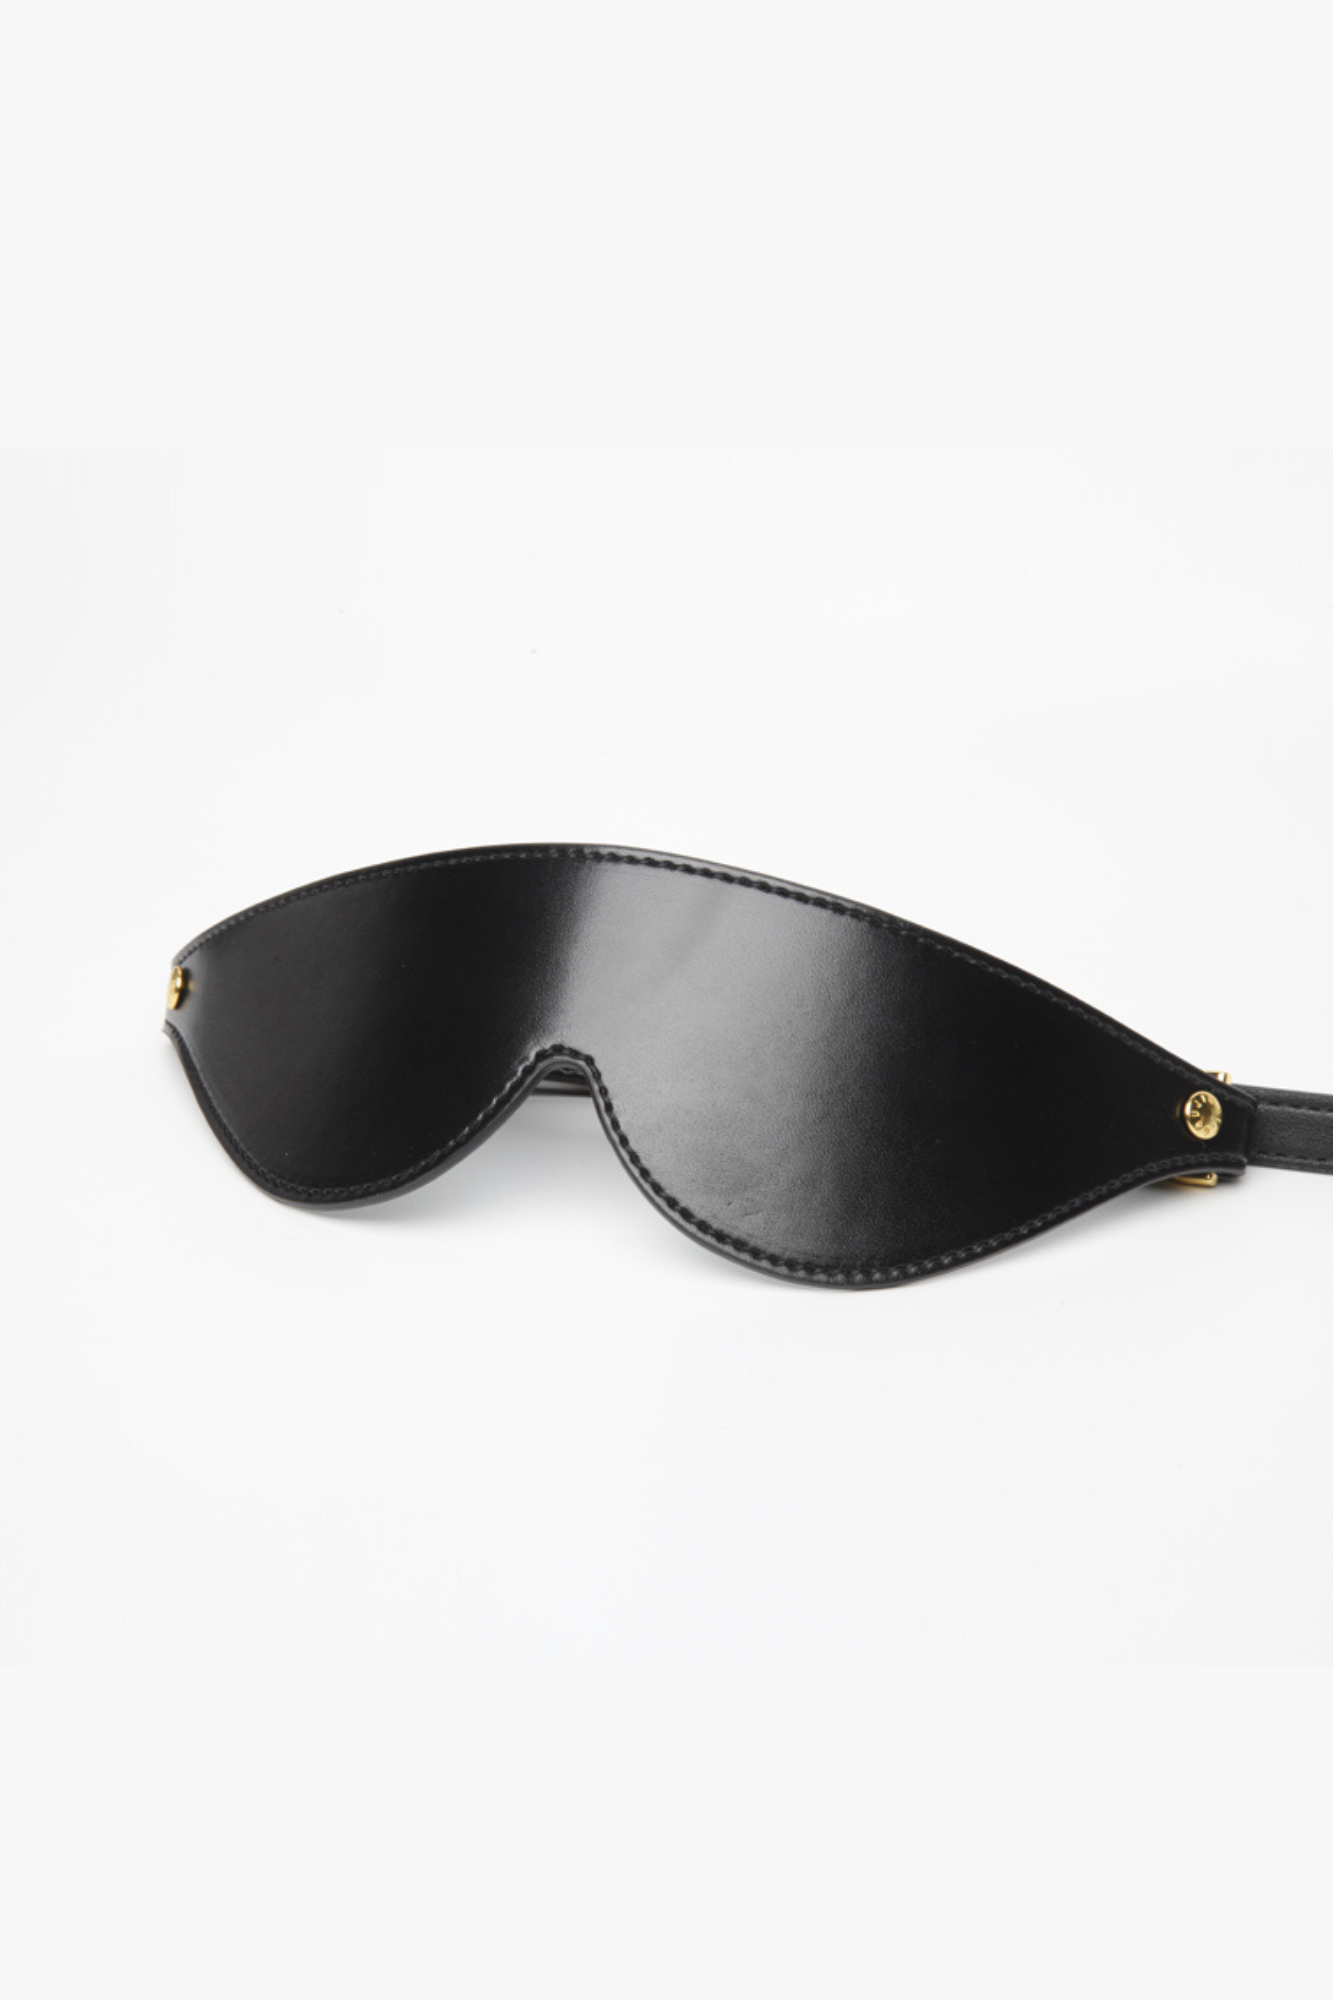 Vegan Leather Blindfold